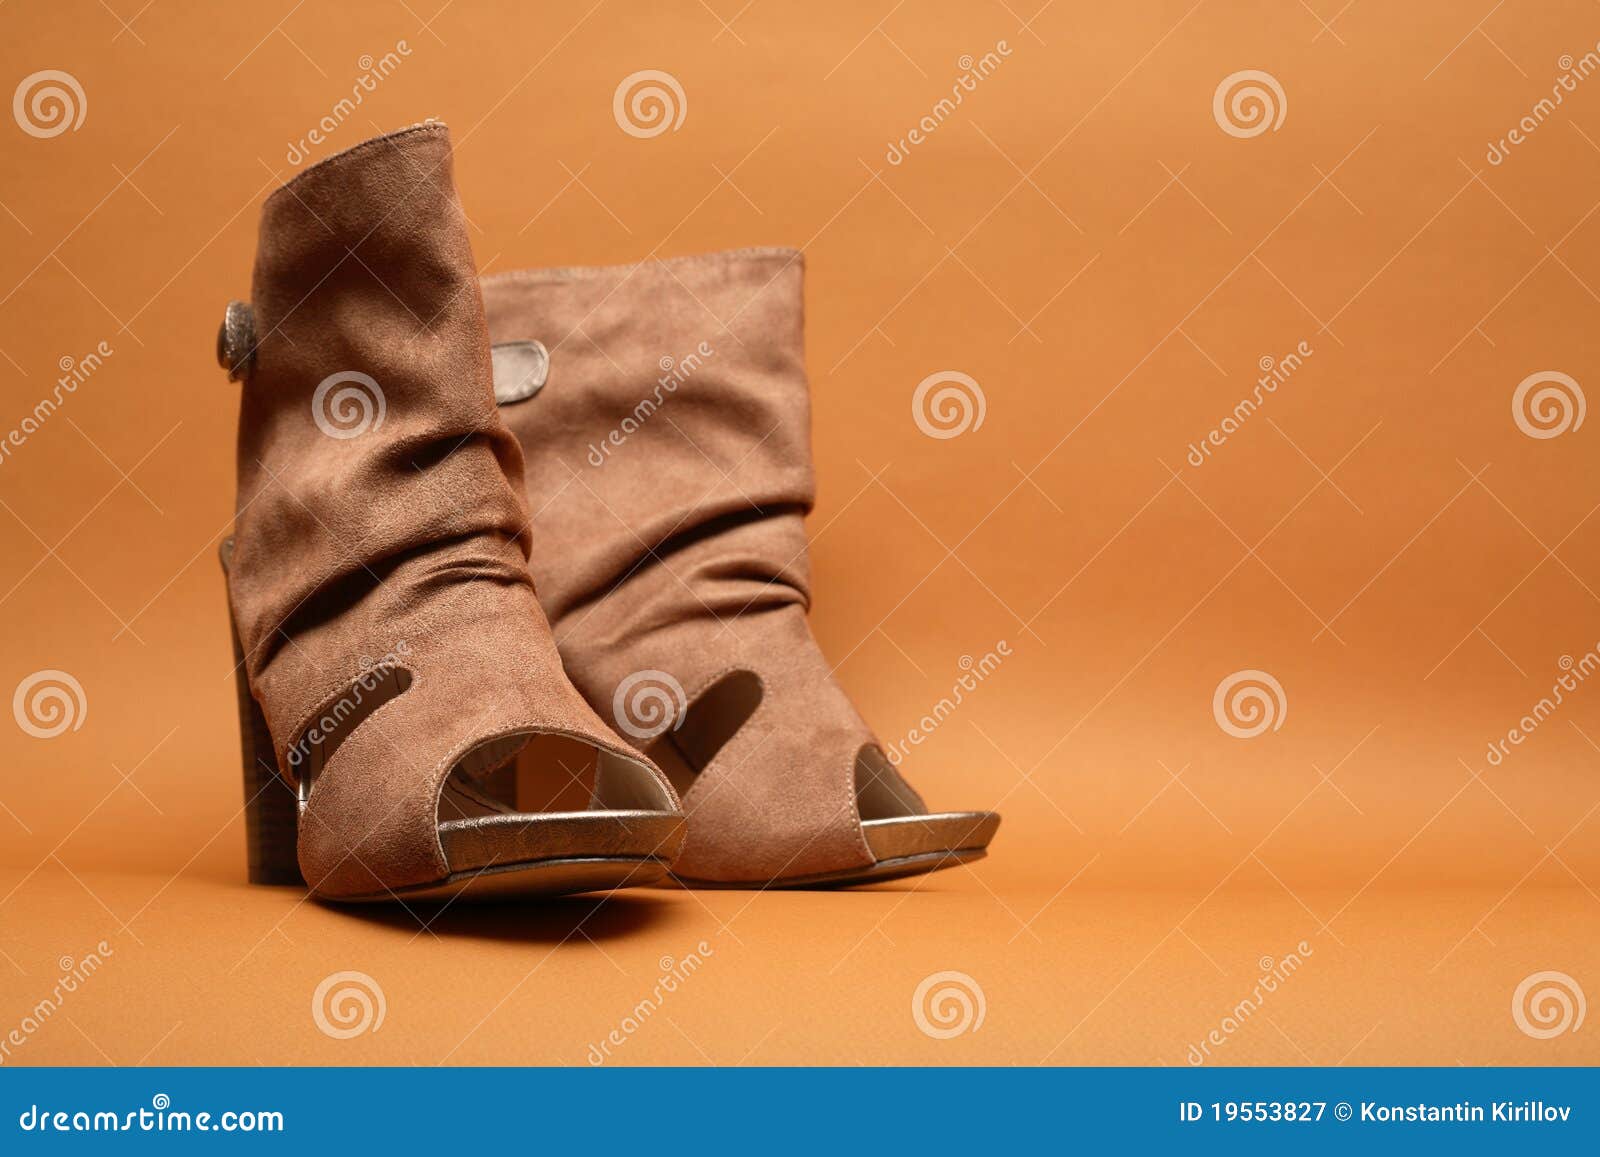 Modern Woman Shammy Shoes stock image. Image of footgear - 19553827